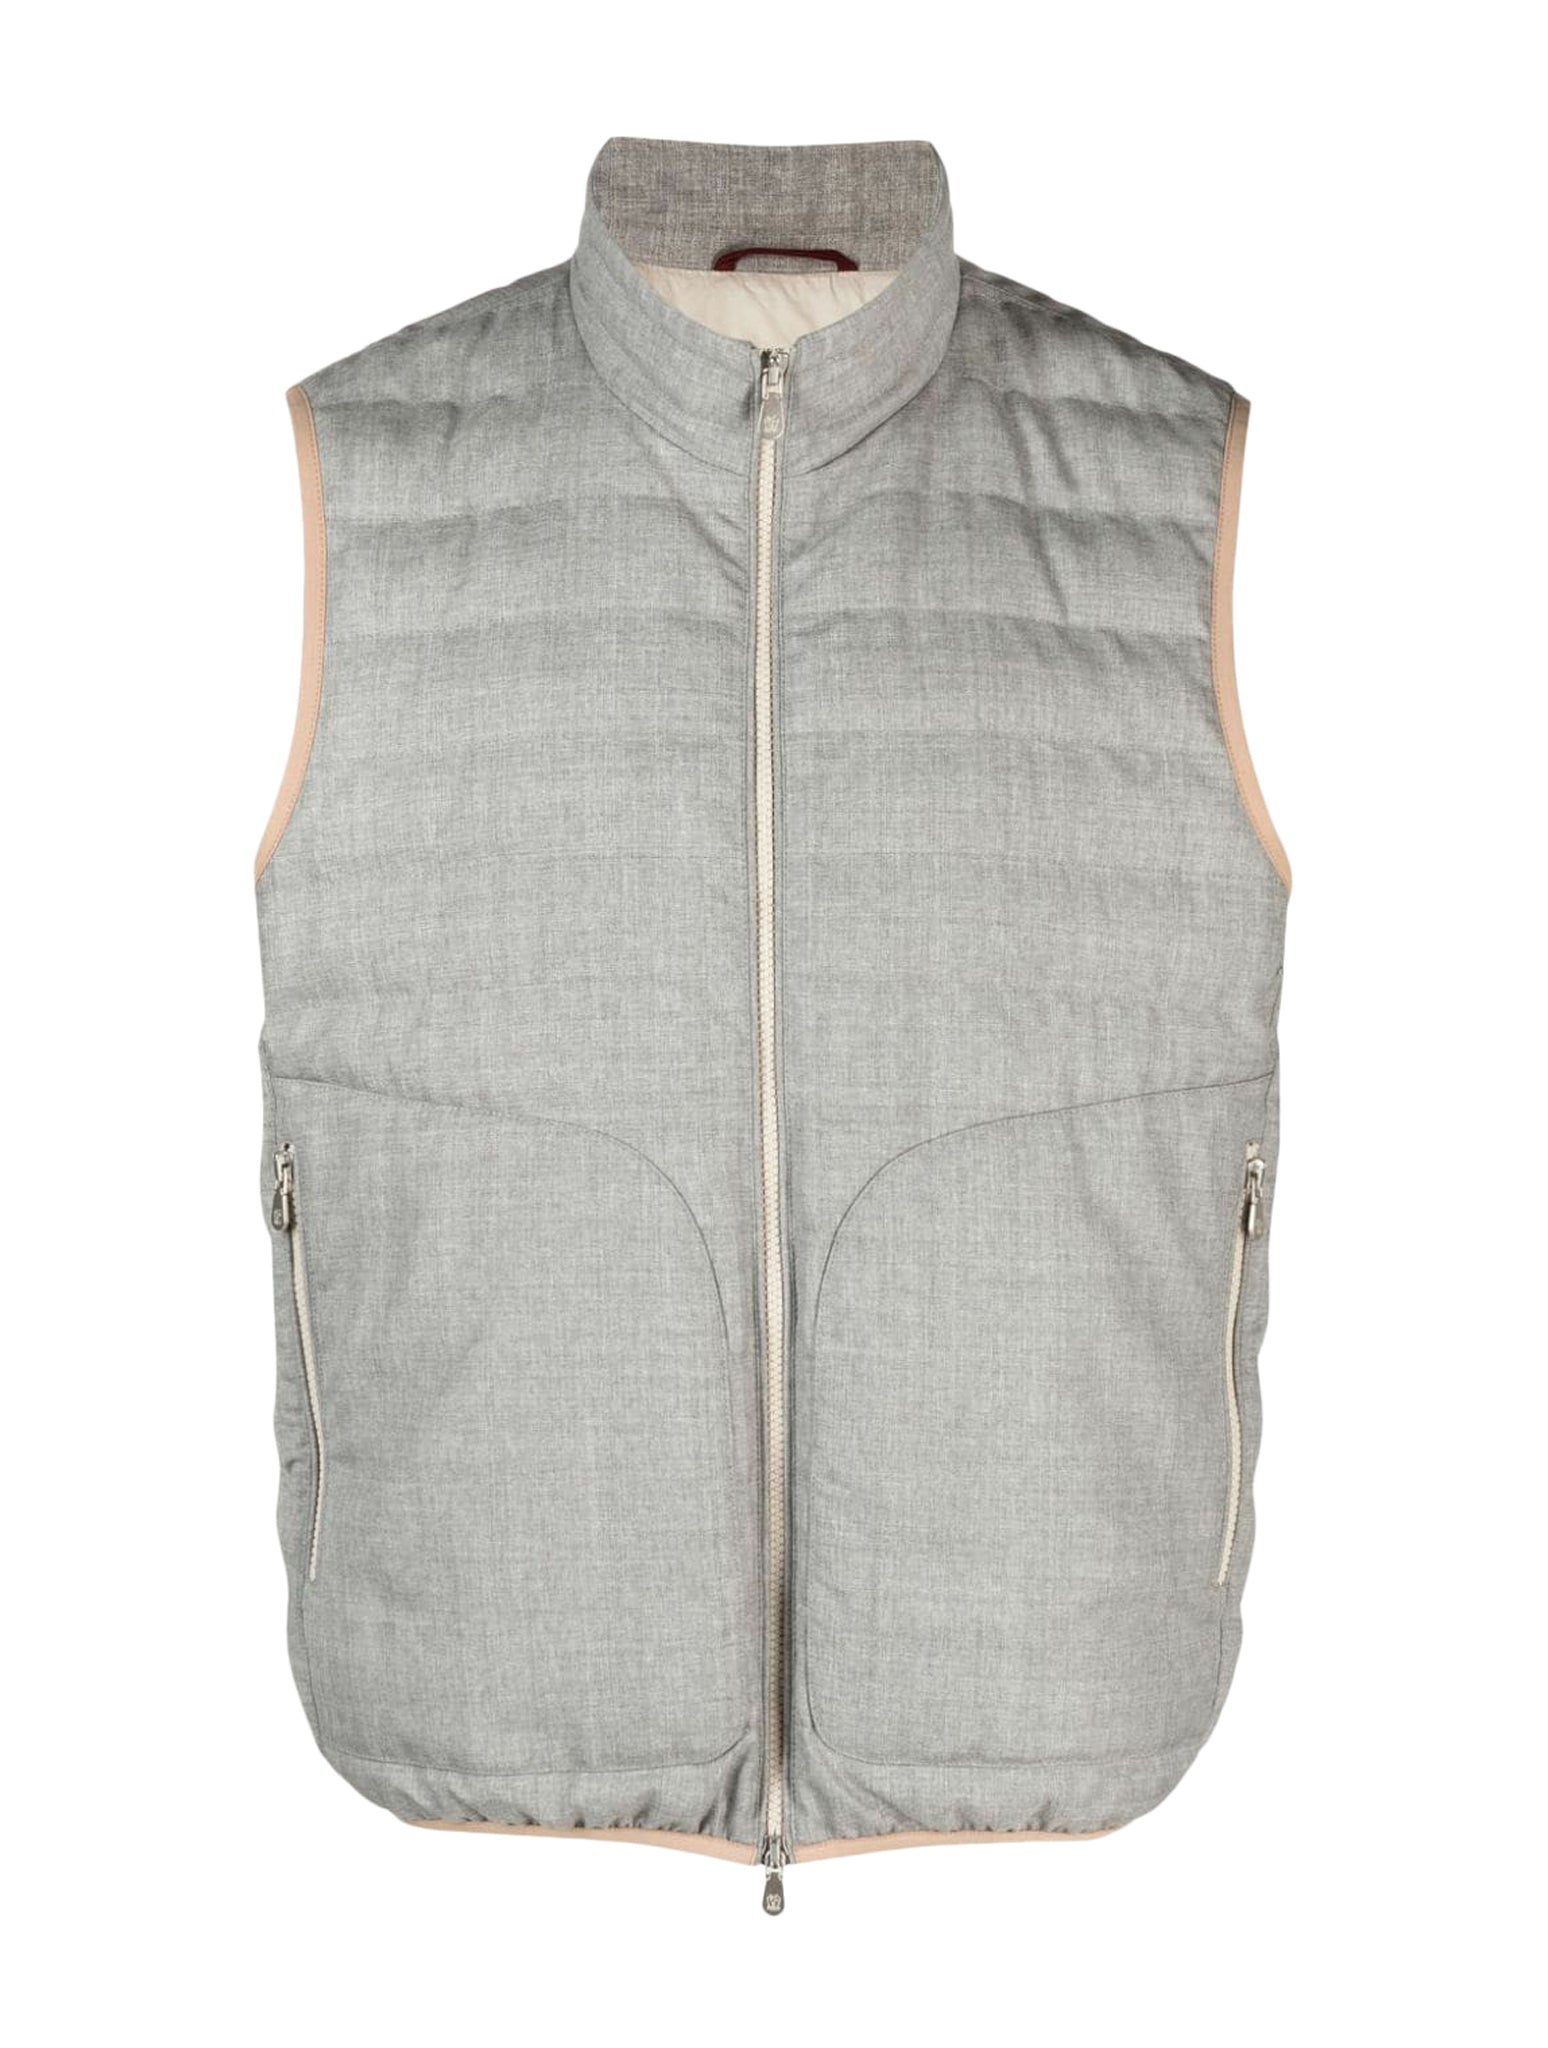 Padded vest with zip